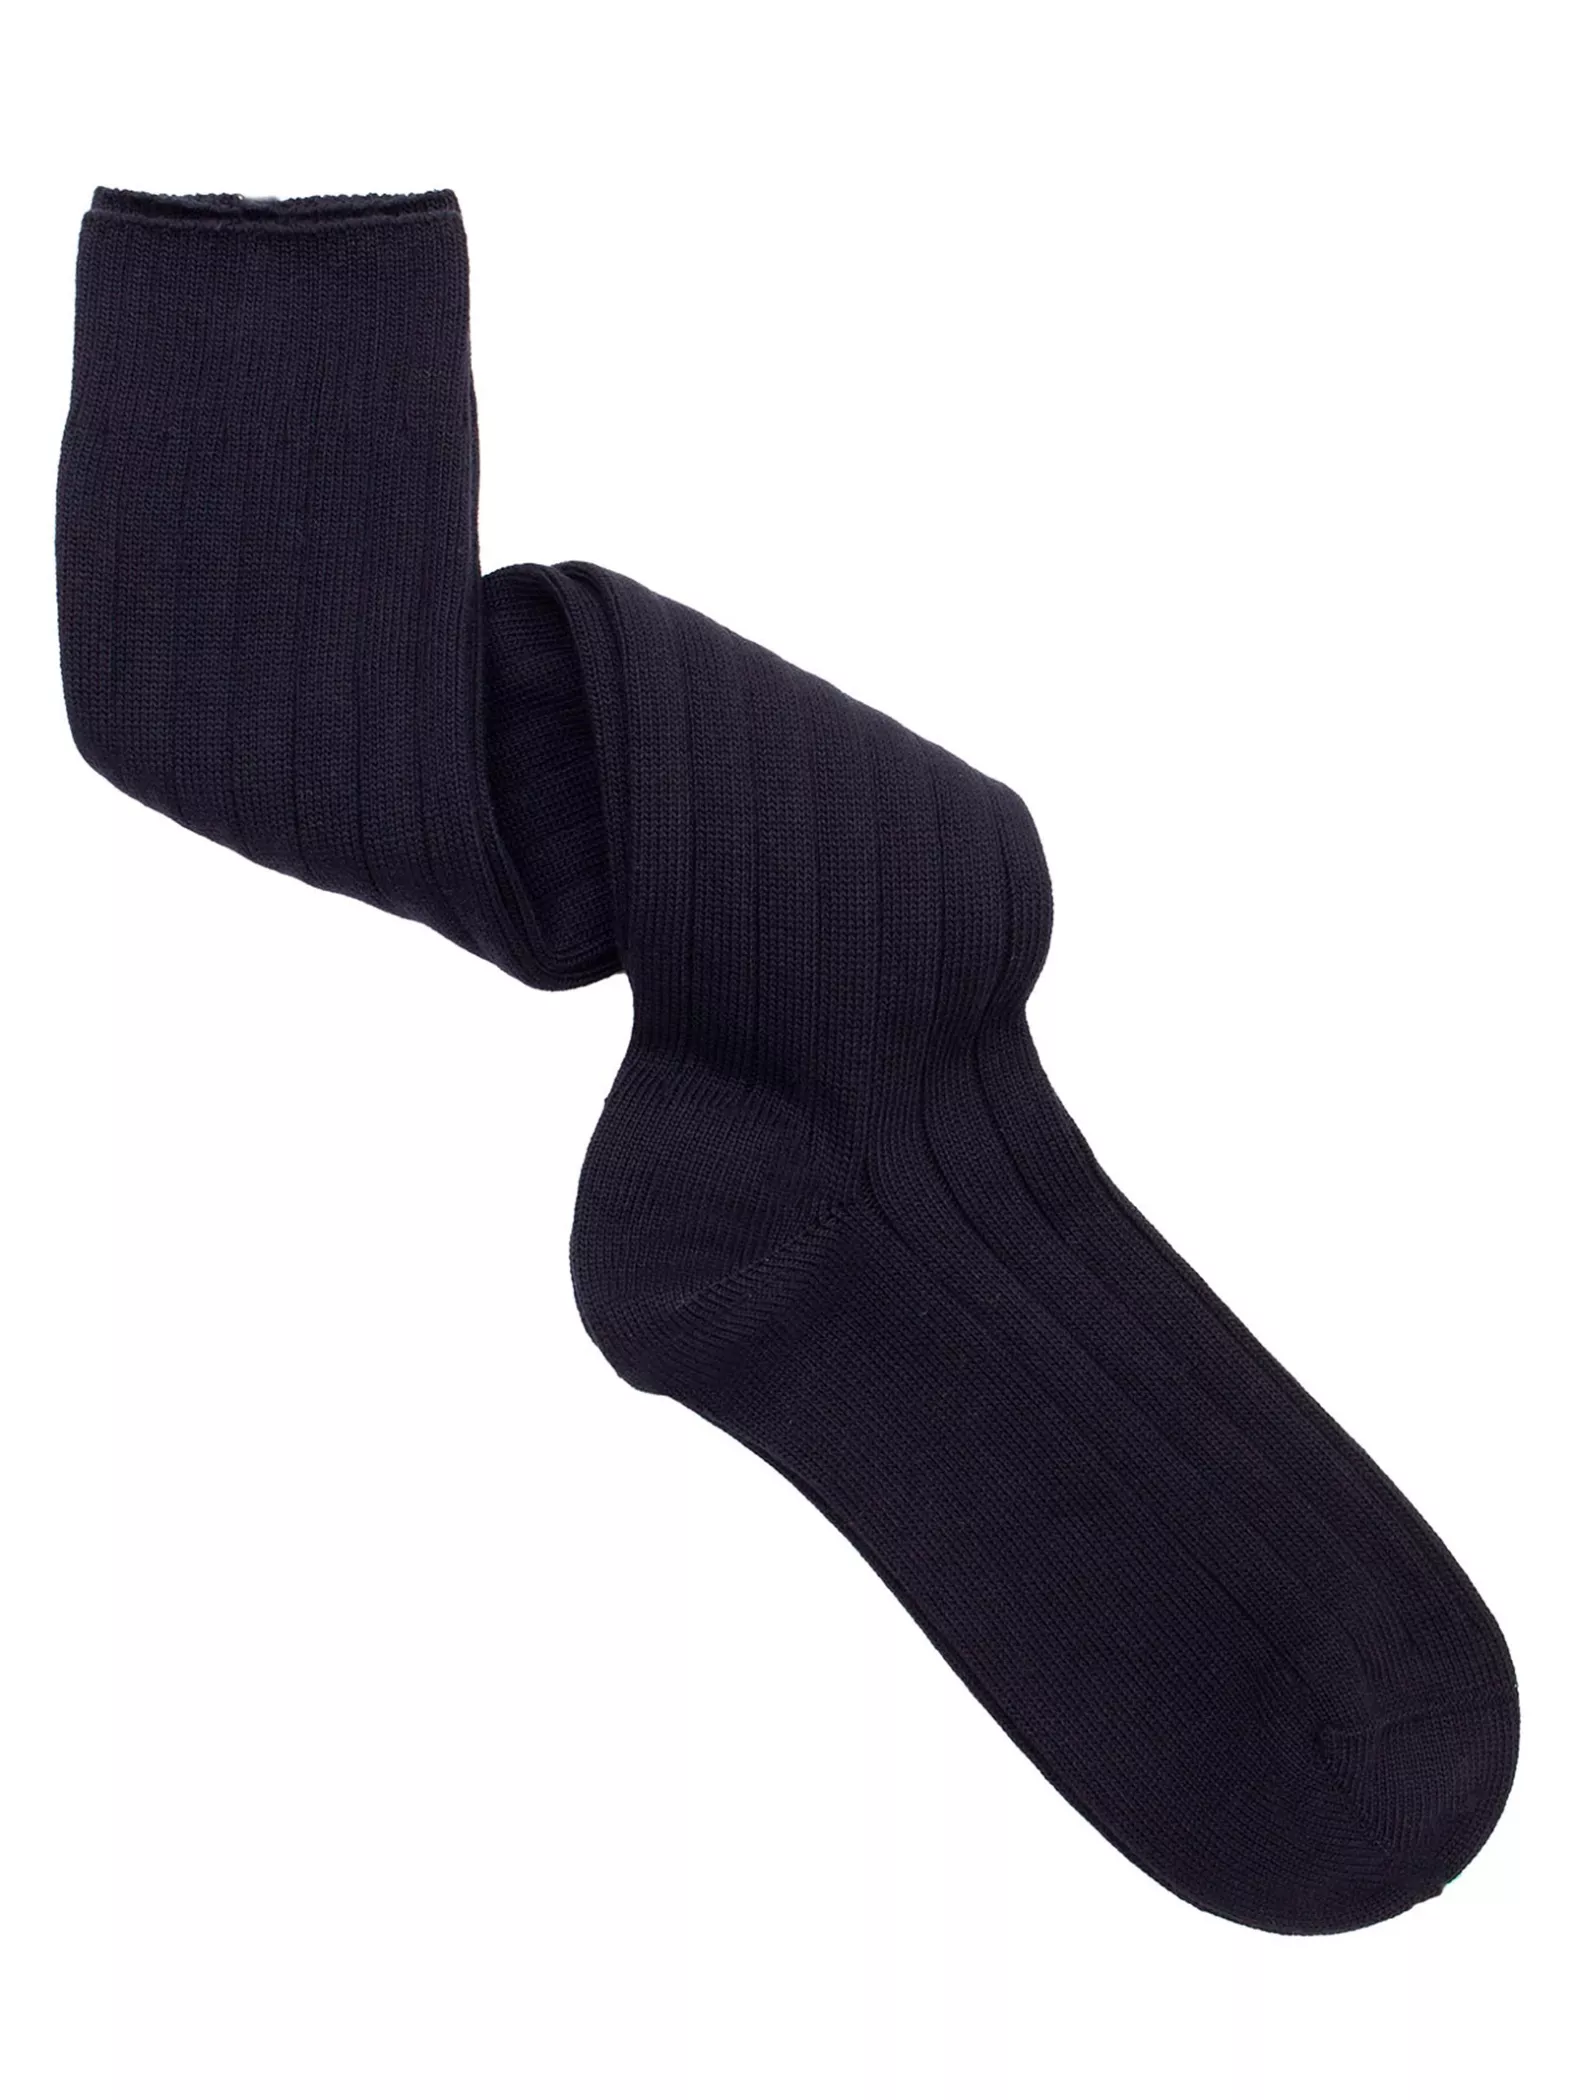 Classic Rib Men's Knee High Socks 100% Bio Cotton